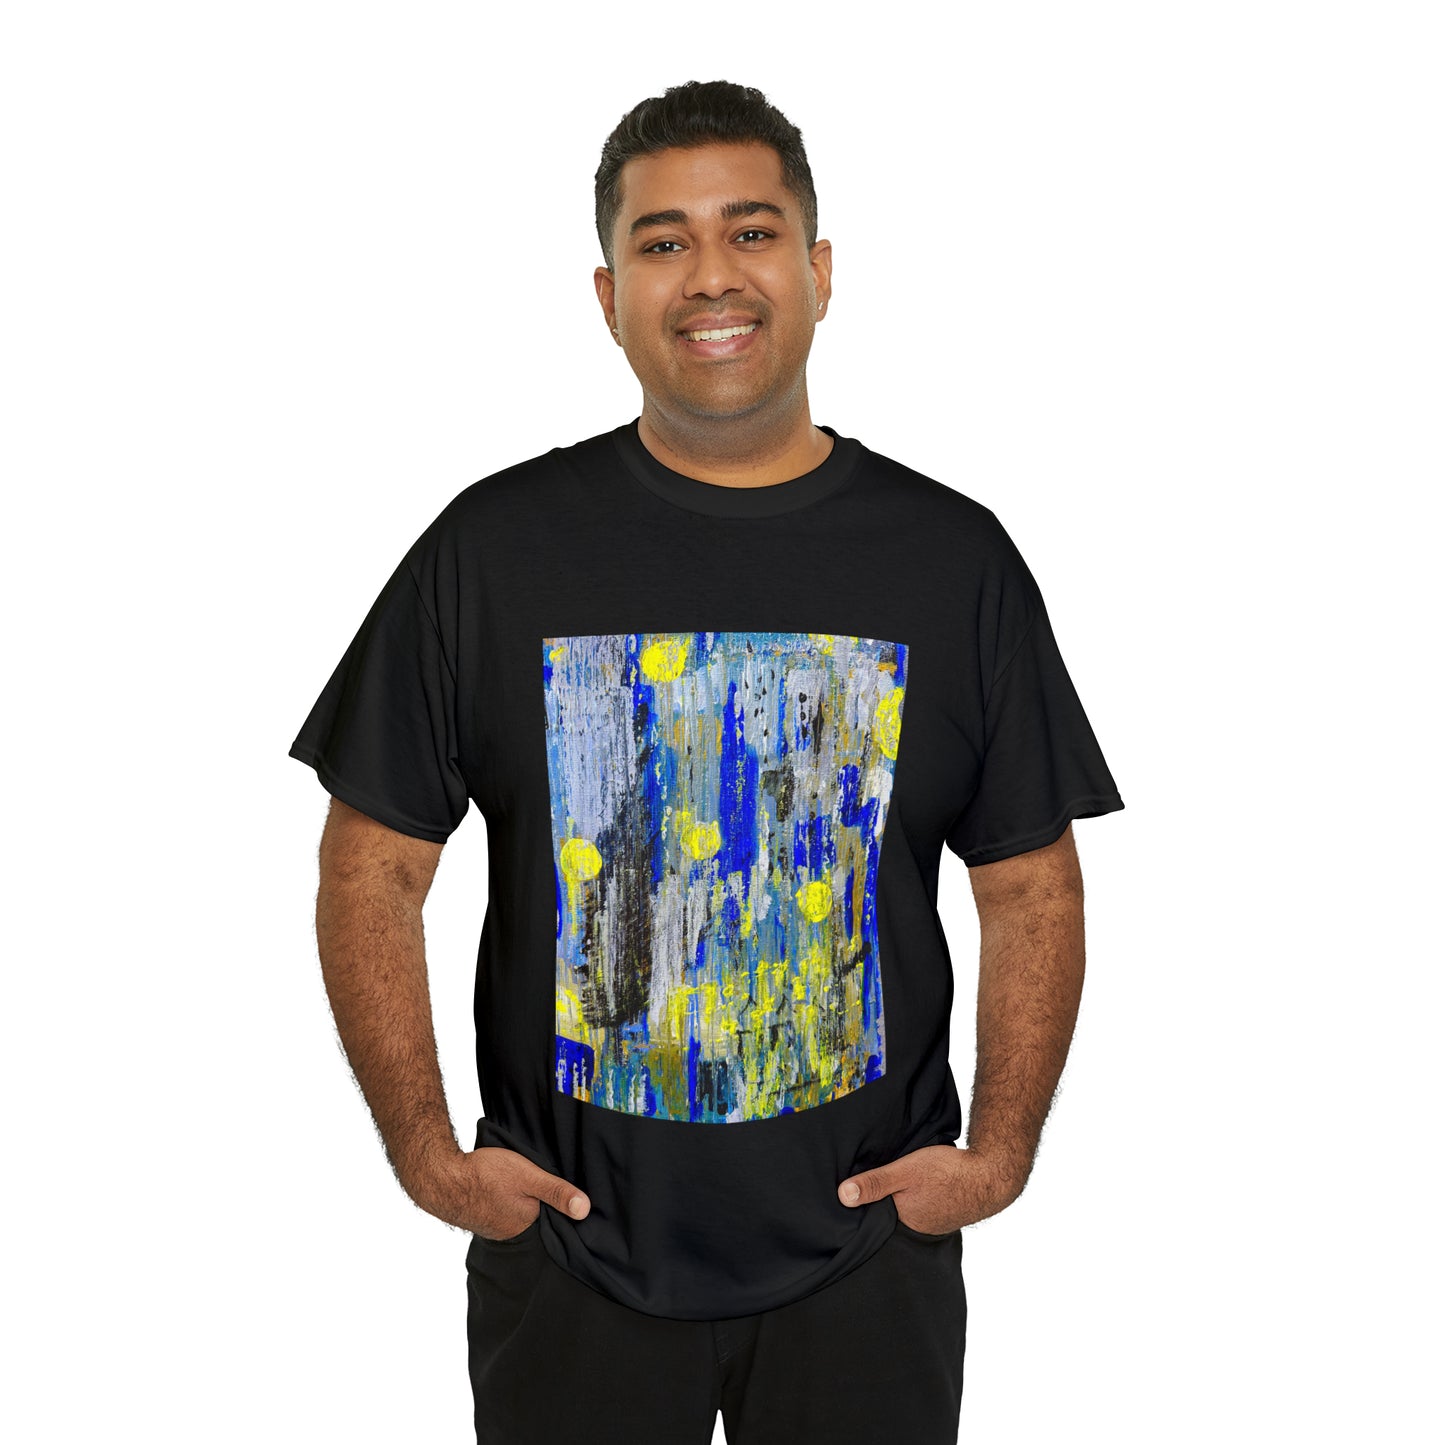 "The Blurred Night" Unisex T-Shirt